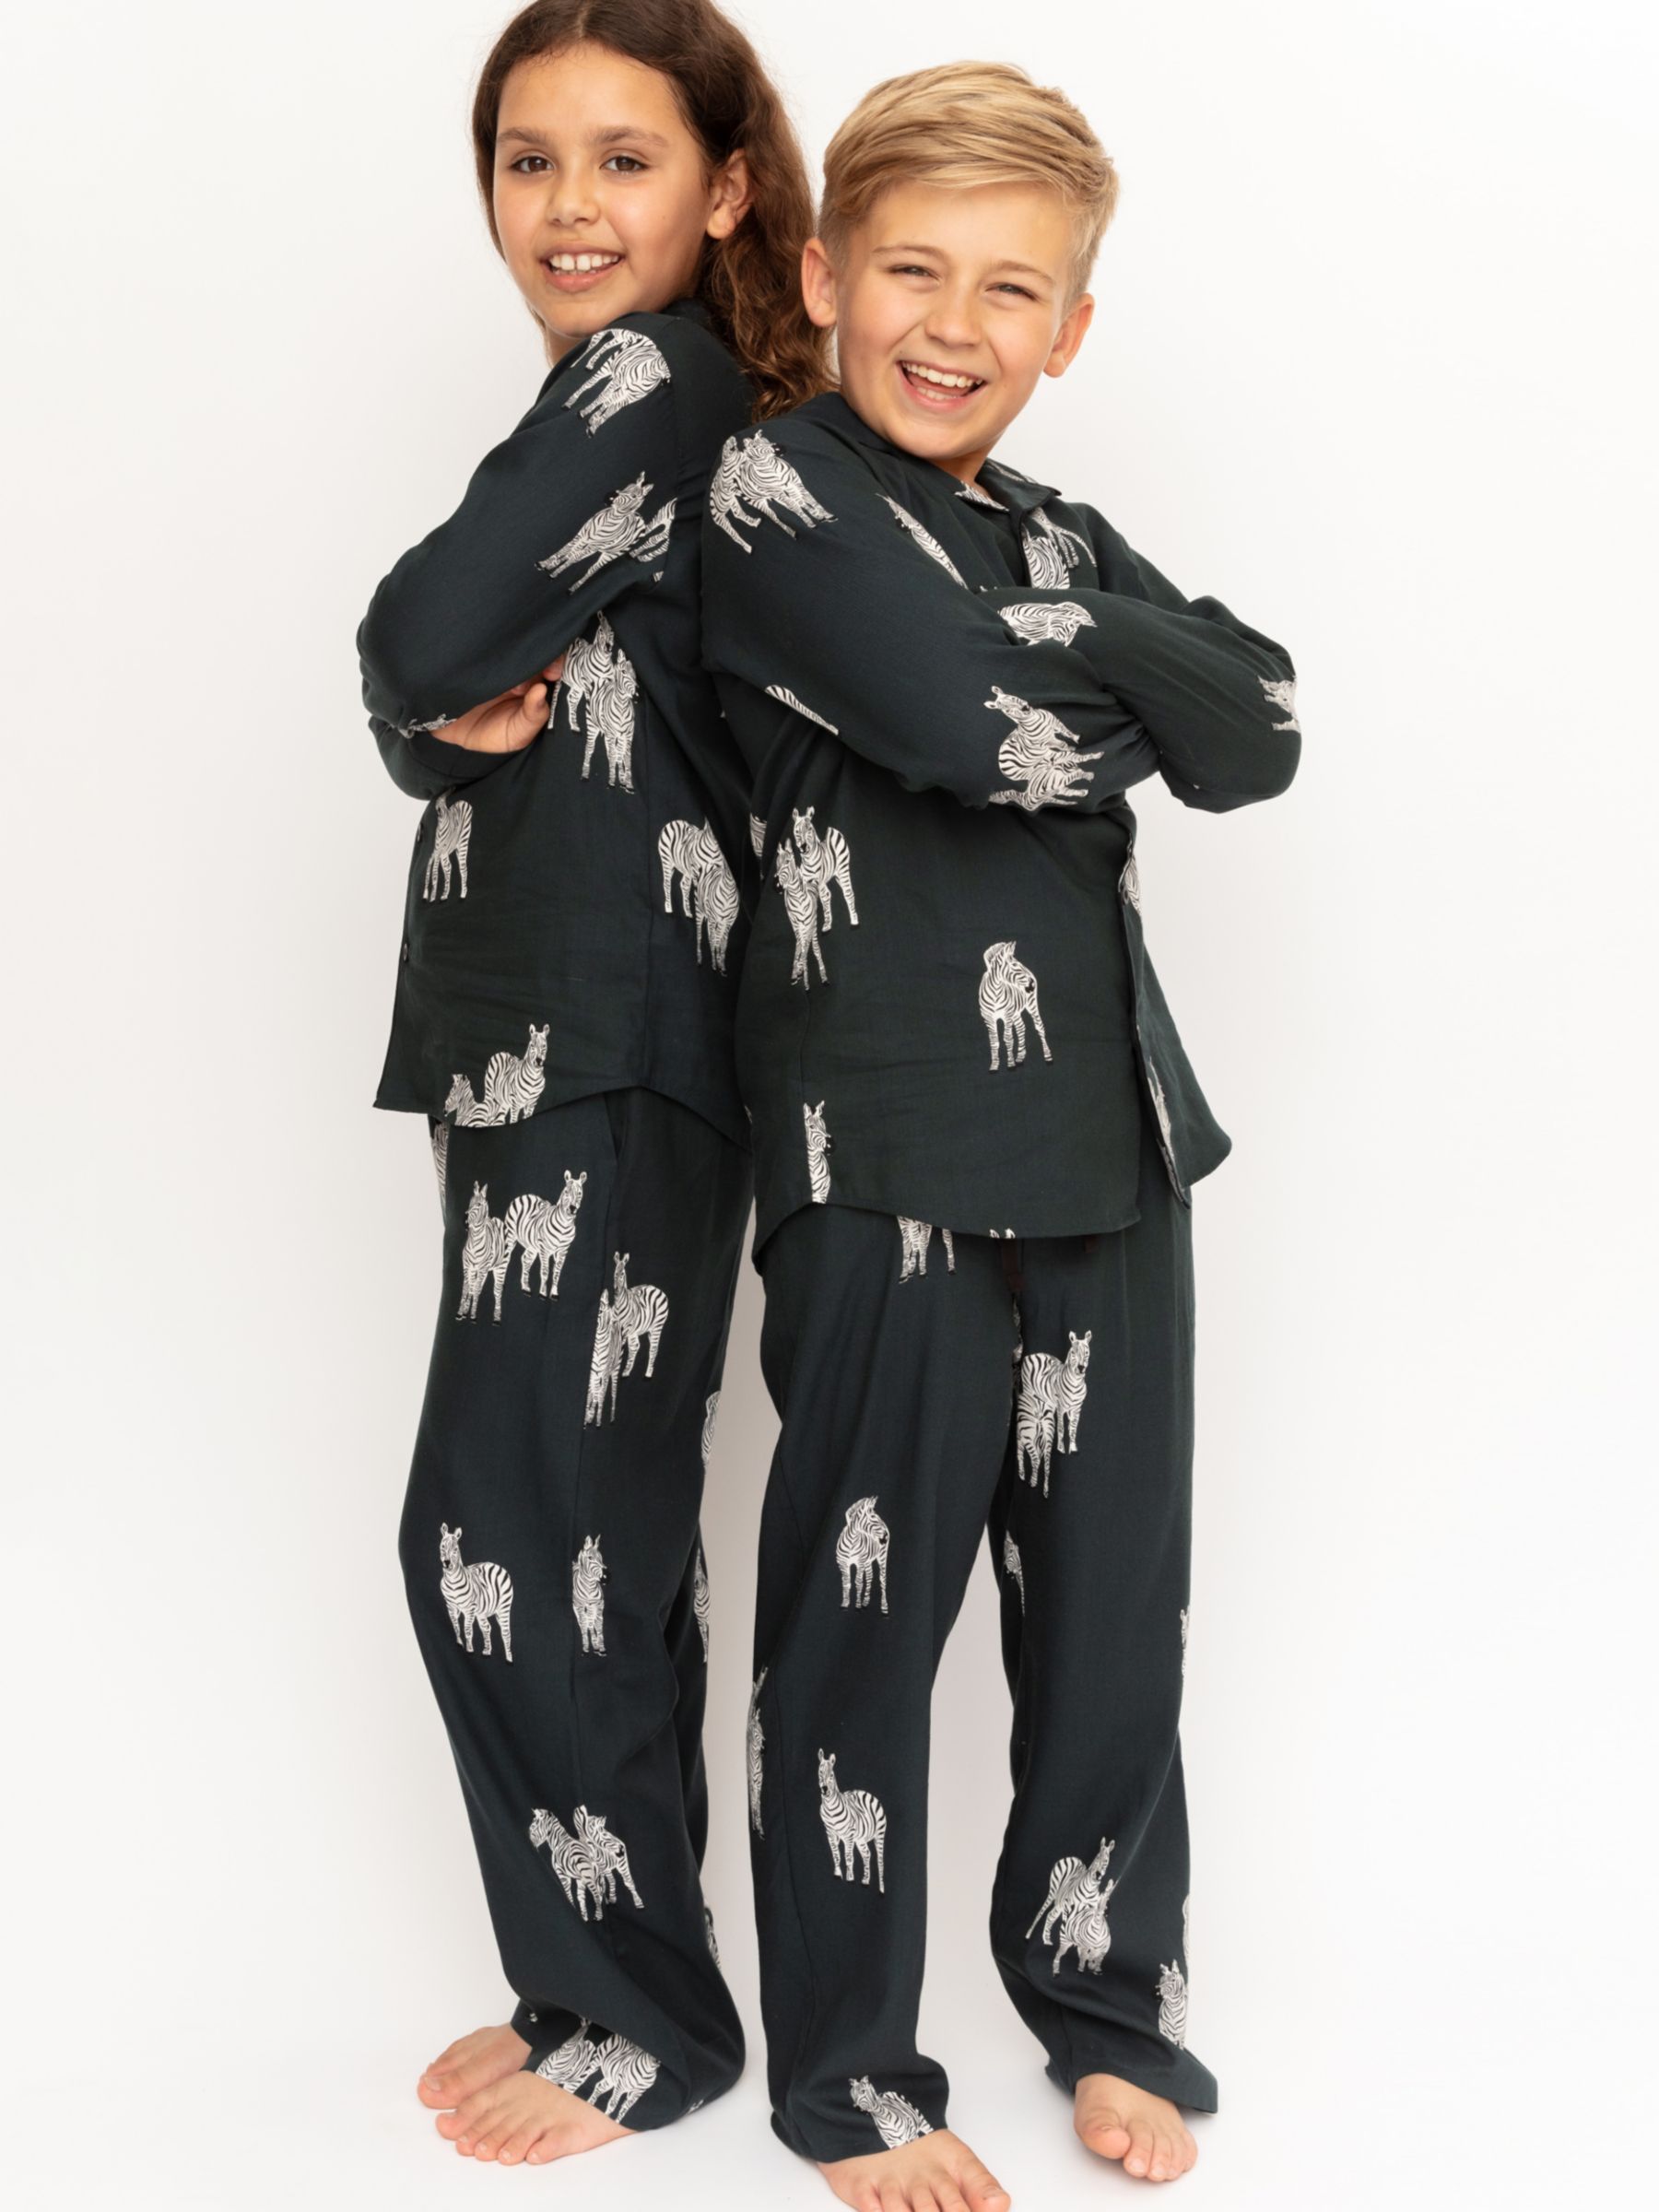 Minijammies Kids' Blake Zebra Print Unisex Pyjamas, Dark Green/Multi, 8-9 years